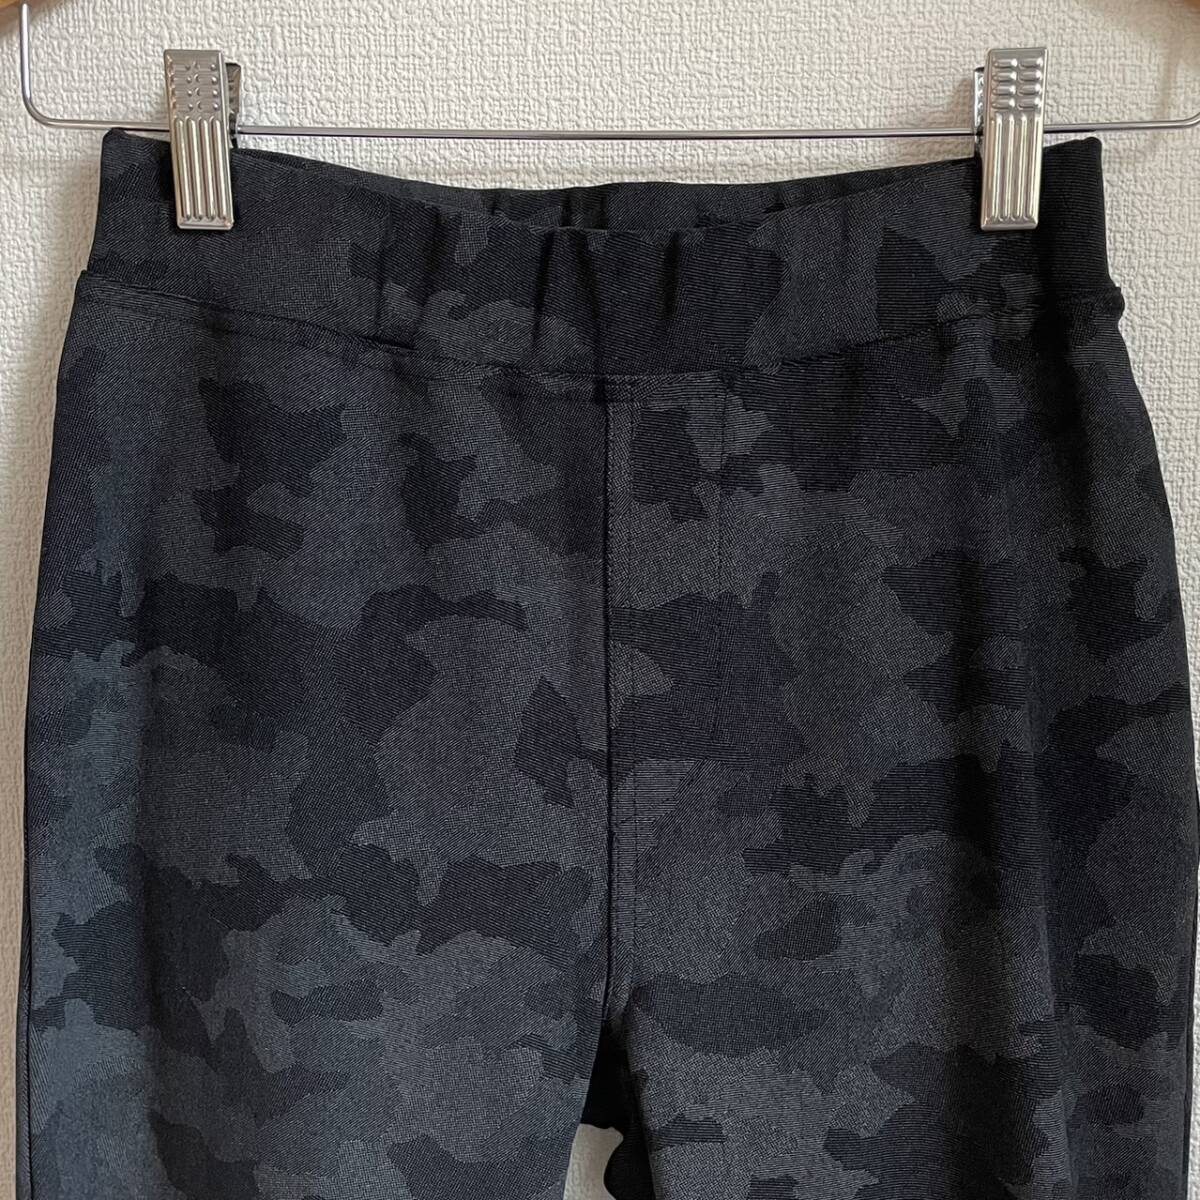  beautiful goods *GIANNI LO GIUDICE stretch pants camouflage waist rubber 